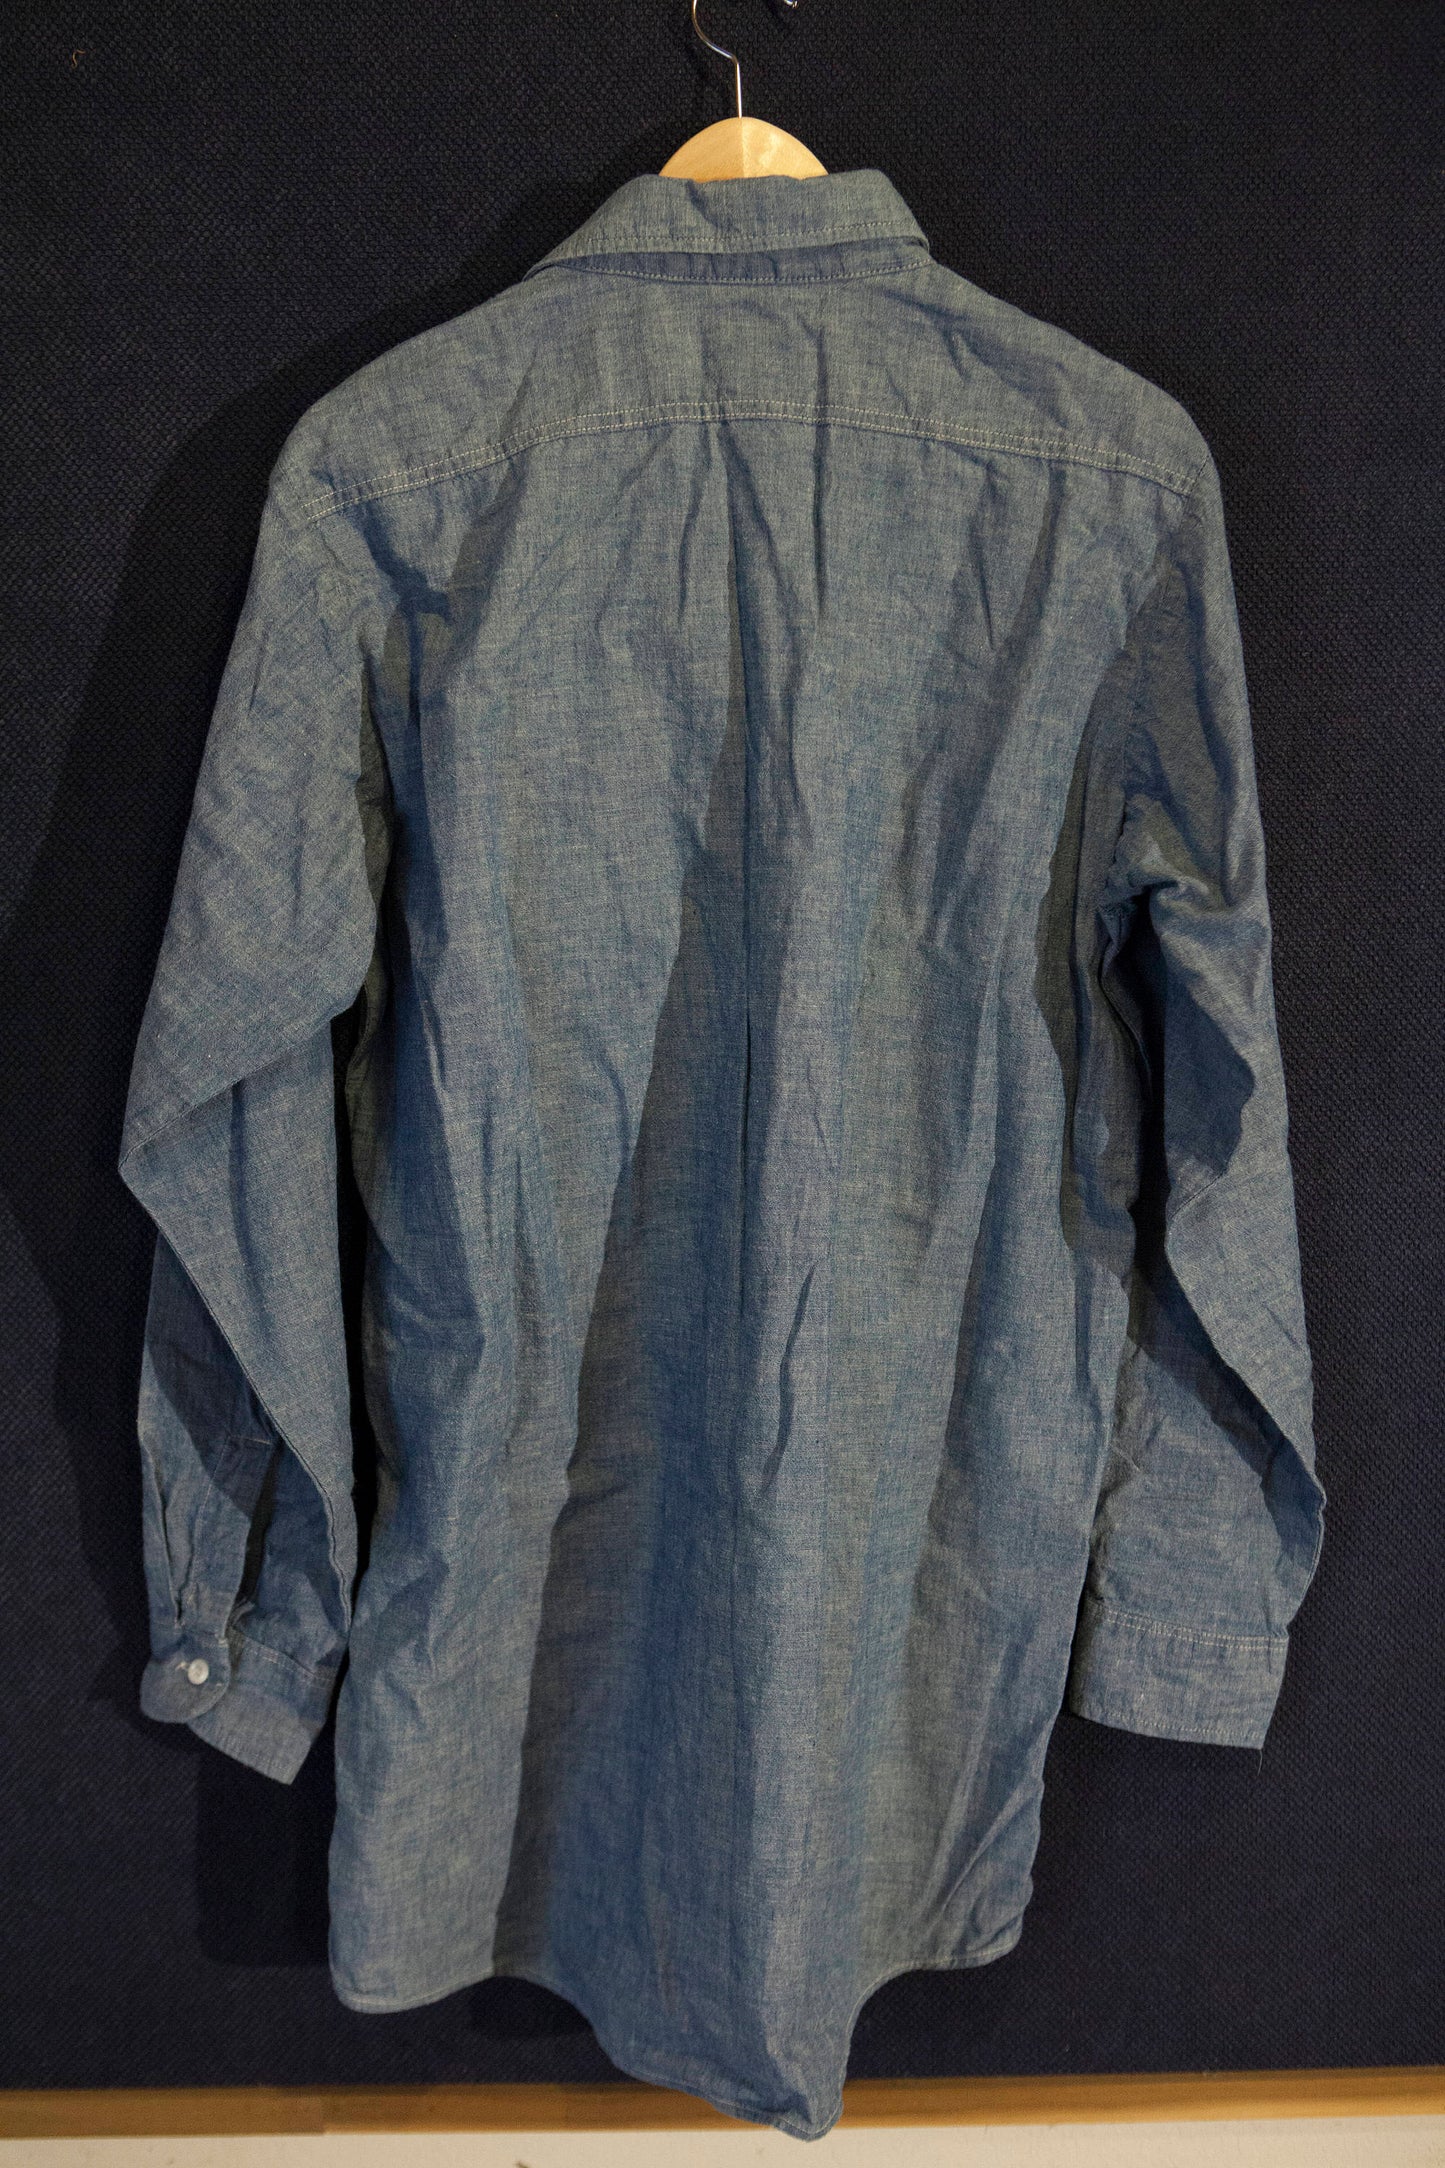 Vintage Osh Kosh B'Gosh 100% Cotton Chambray Workshirt with Acorn Pockets and Pen Holder Size Medium TALL